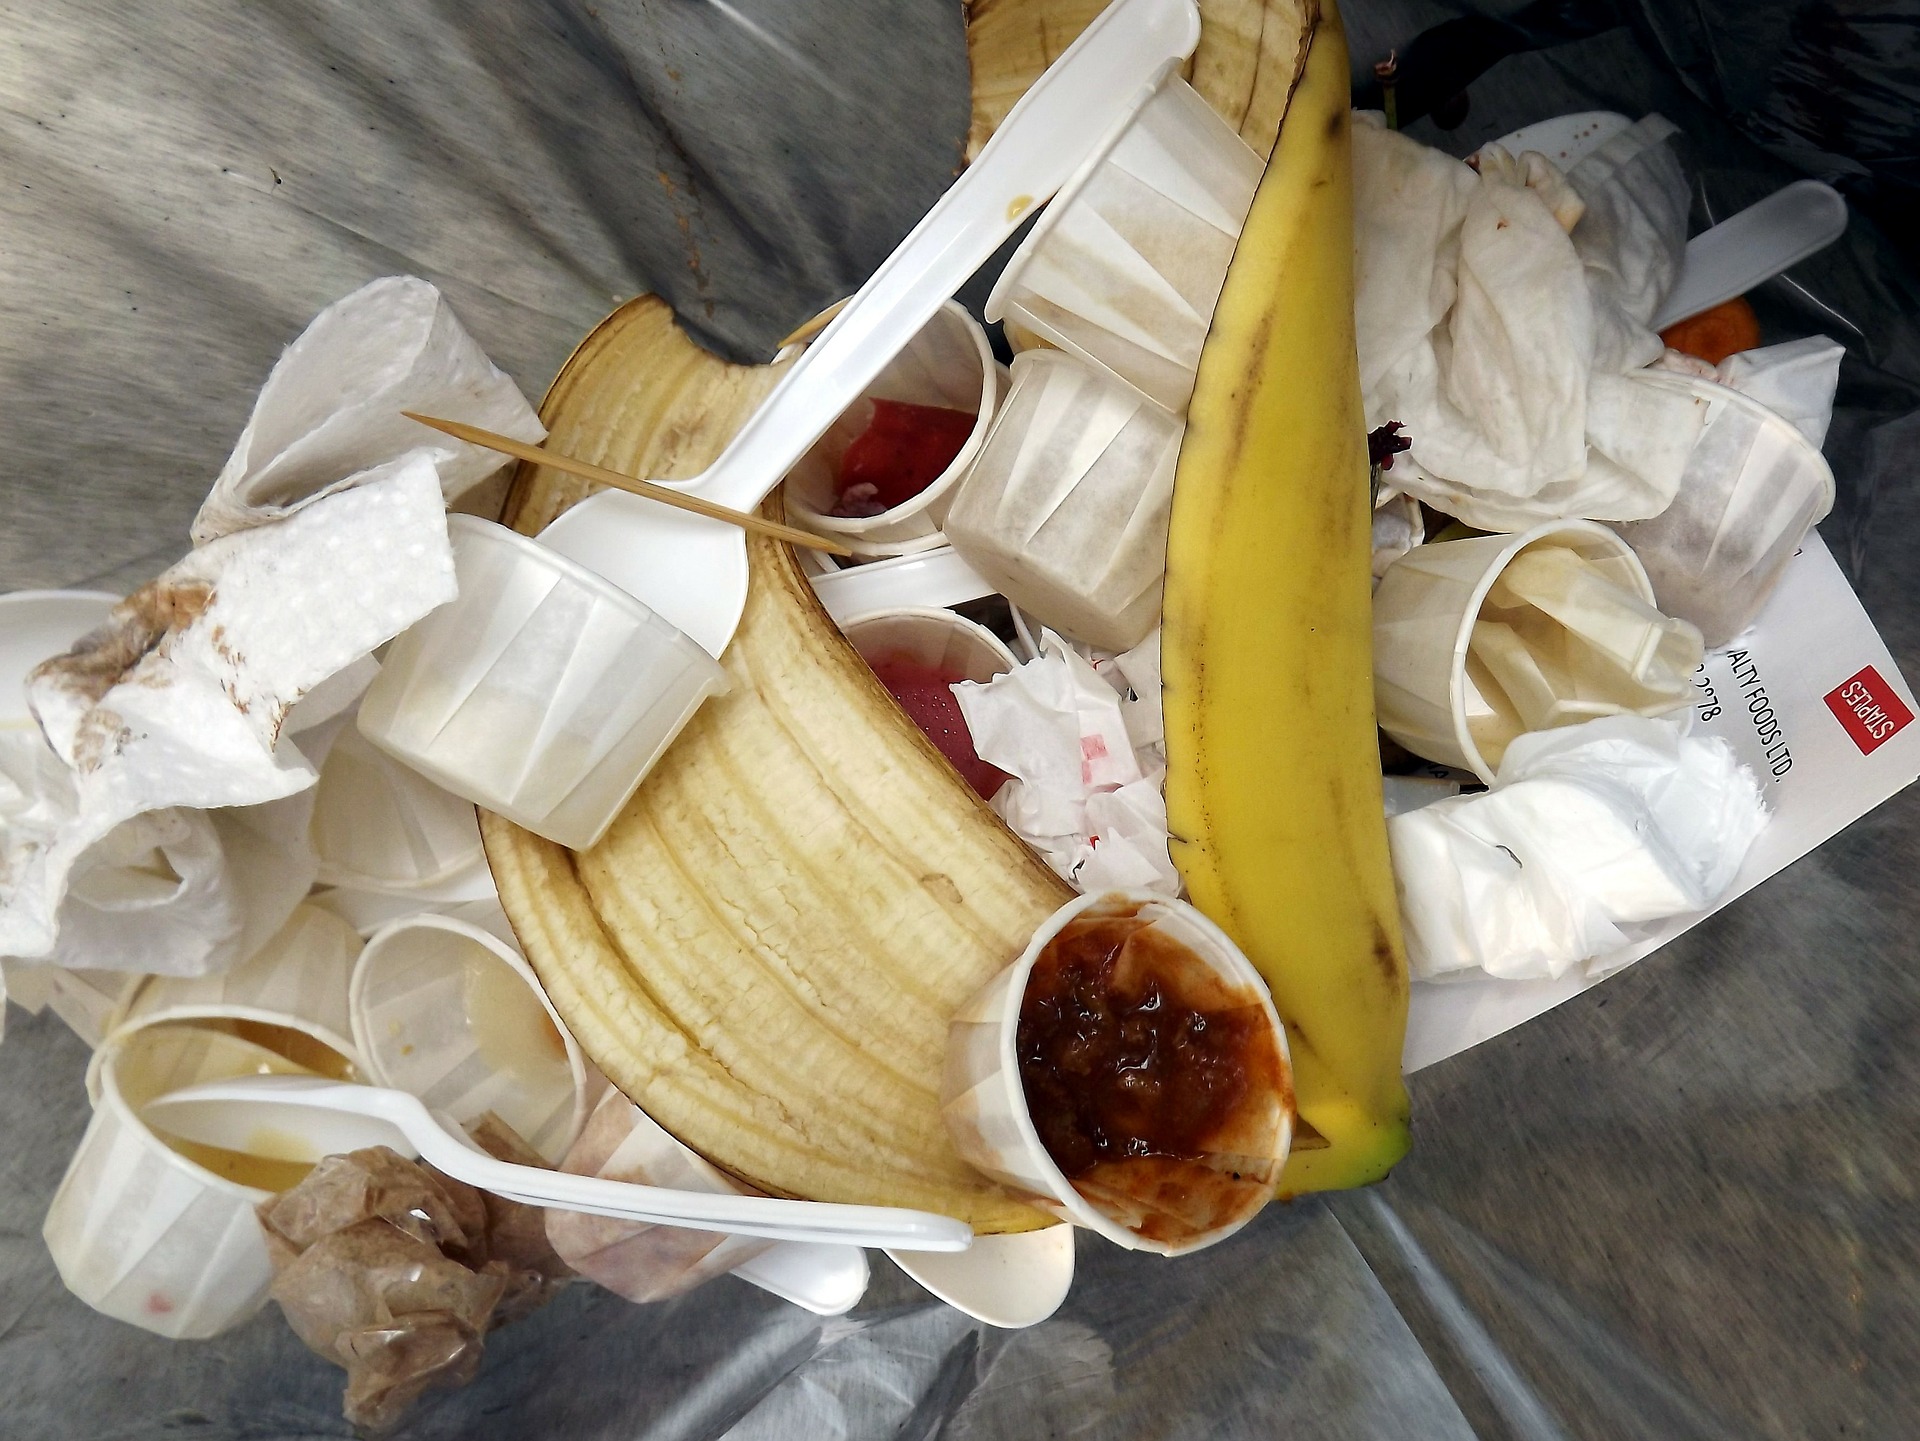 A bin full of rubbish and banana skins